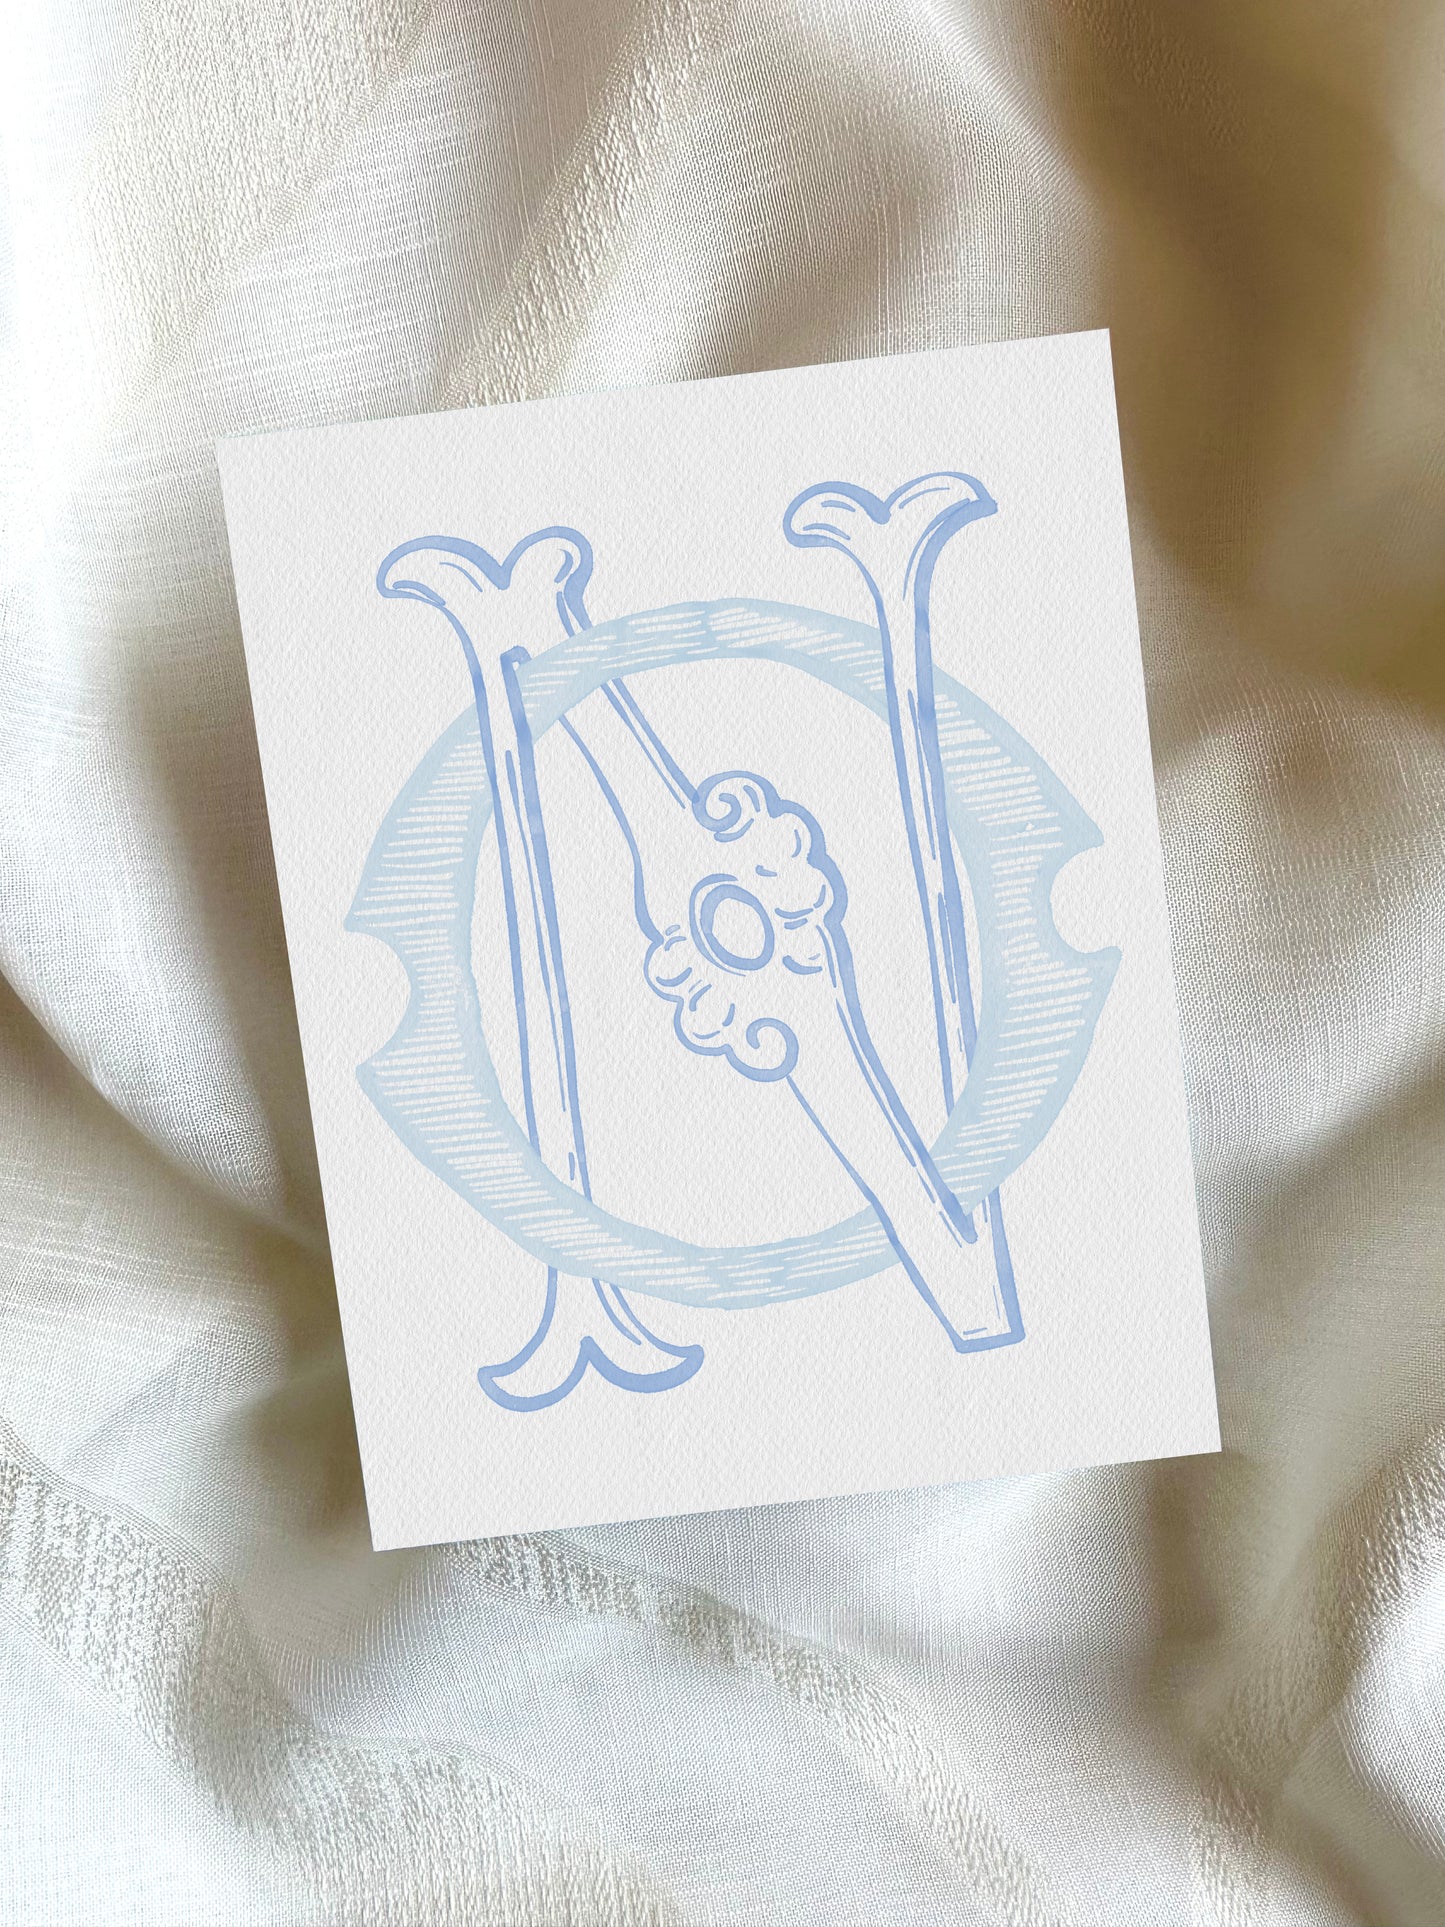 2 Letter Monogram with Letters NO ON | Digital Download - Wedding Monogram SVG, Personal Logo, Wedding Logo for Wedding Invitations The Wedding Crest Lab